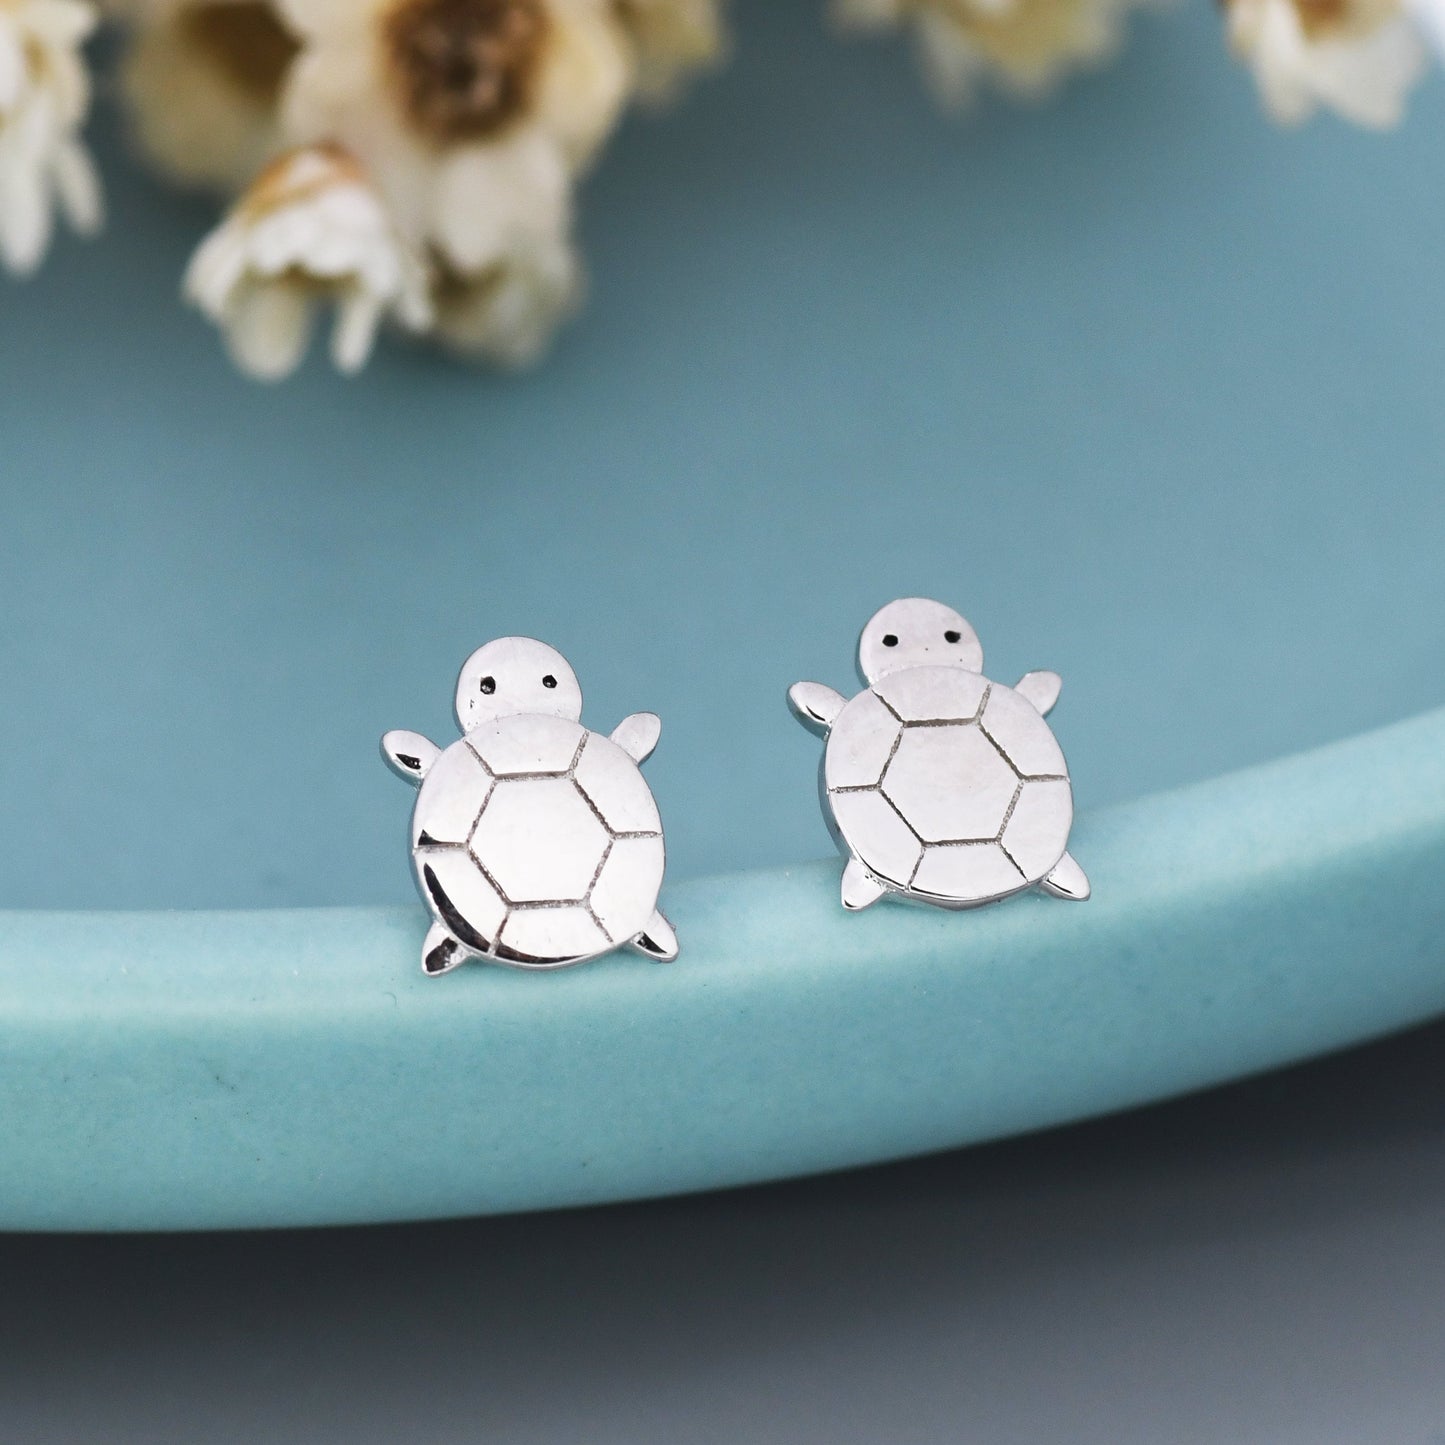 Cute Little Turtle Stud Earrings in Sterling Silver - Animal Stud Earrings  - Nature Inspired  - Cute,  Fun, Whimsical